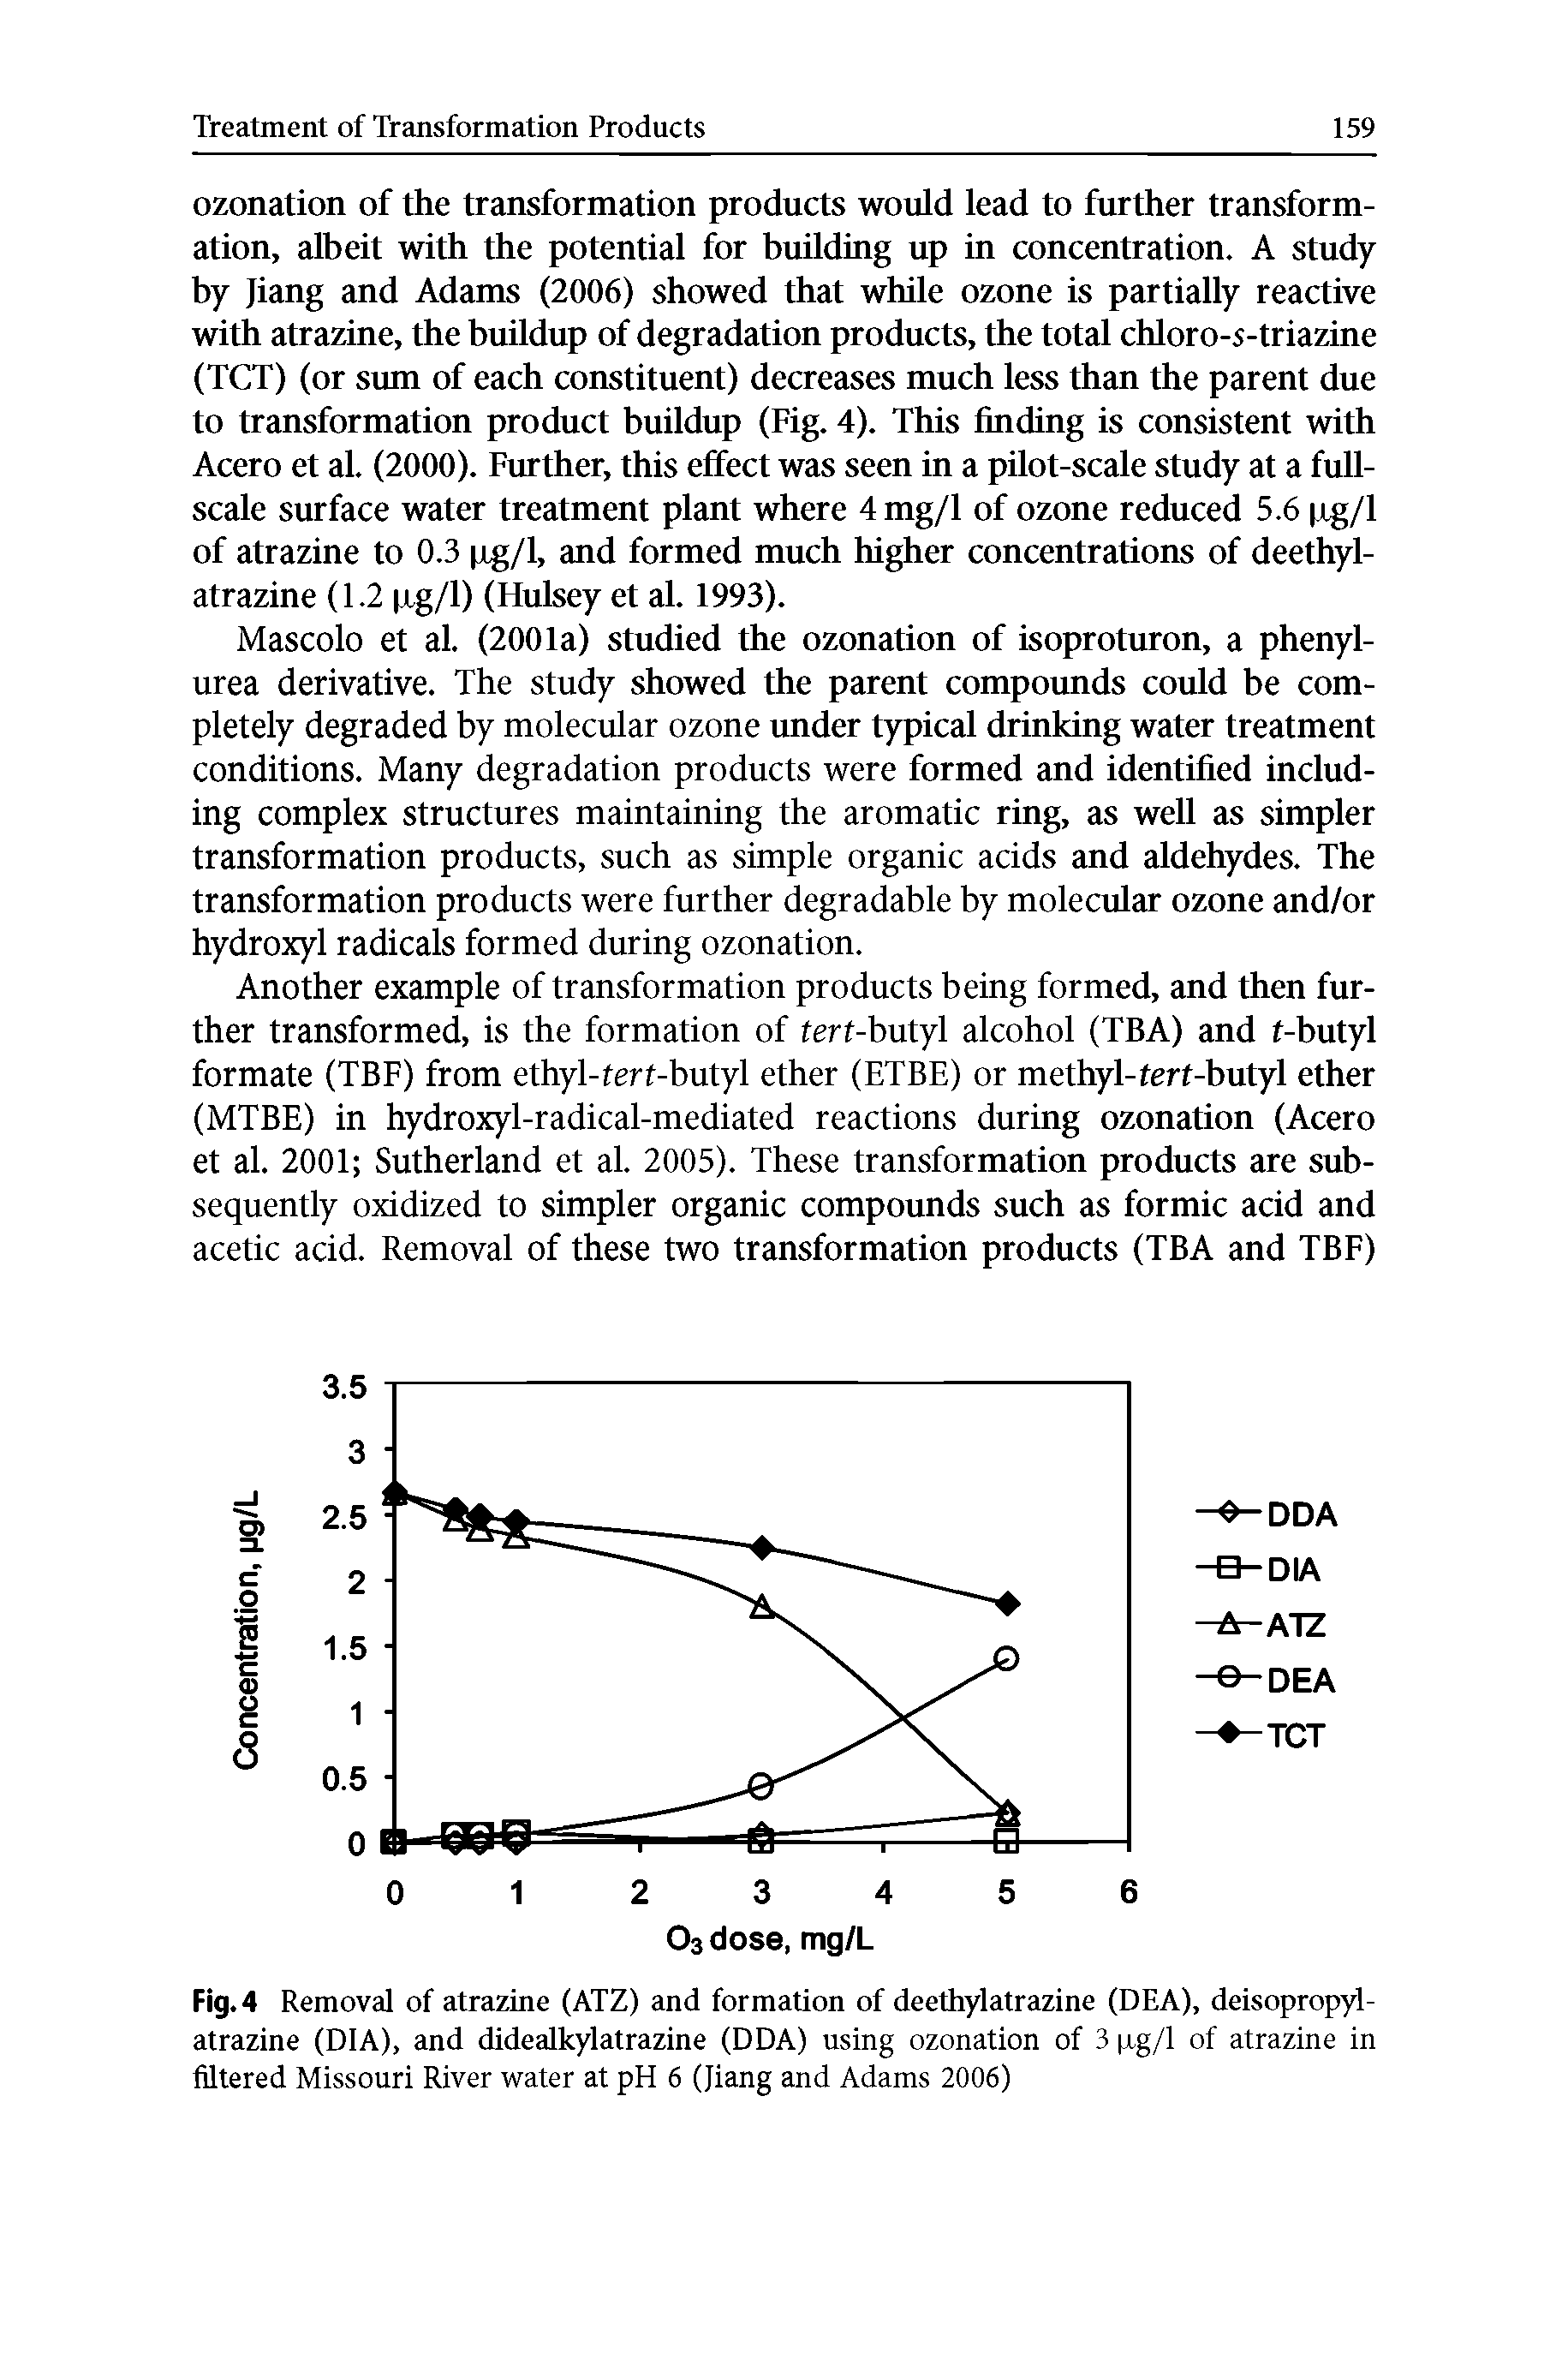 Fig. 4 Removal of atrazine (ATZ) and formation of deethylatrazine (DEA), deisopropyl-atrazine (DIA), and didealkylatrazine (DDA) using ozonation of 3 pg/1 of atrazine in filtered Missouri River water at pH 6 (Jiang and Adams 2006)...